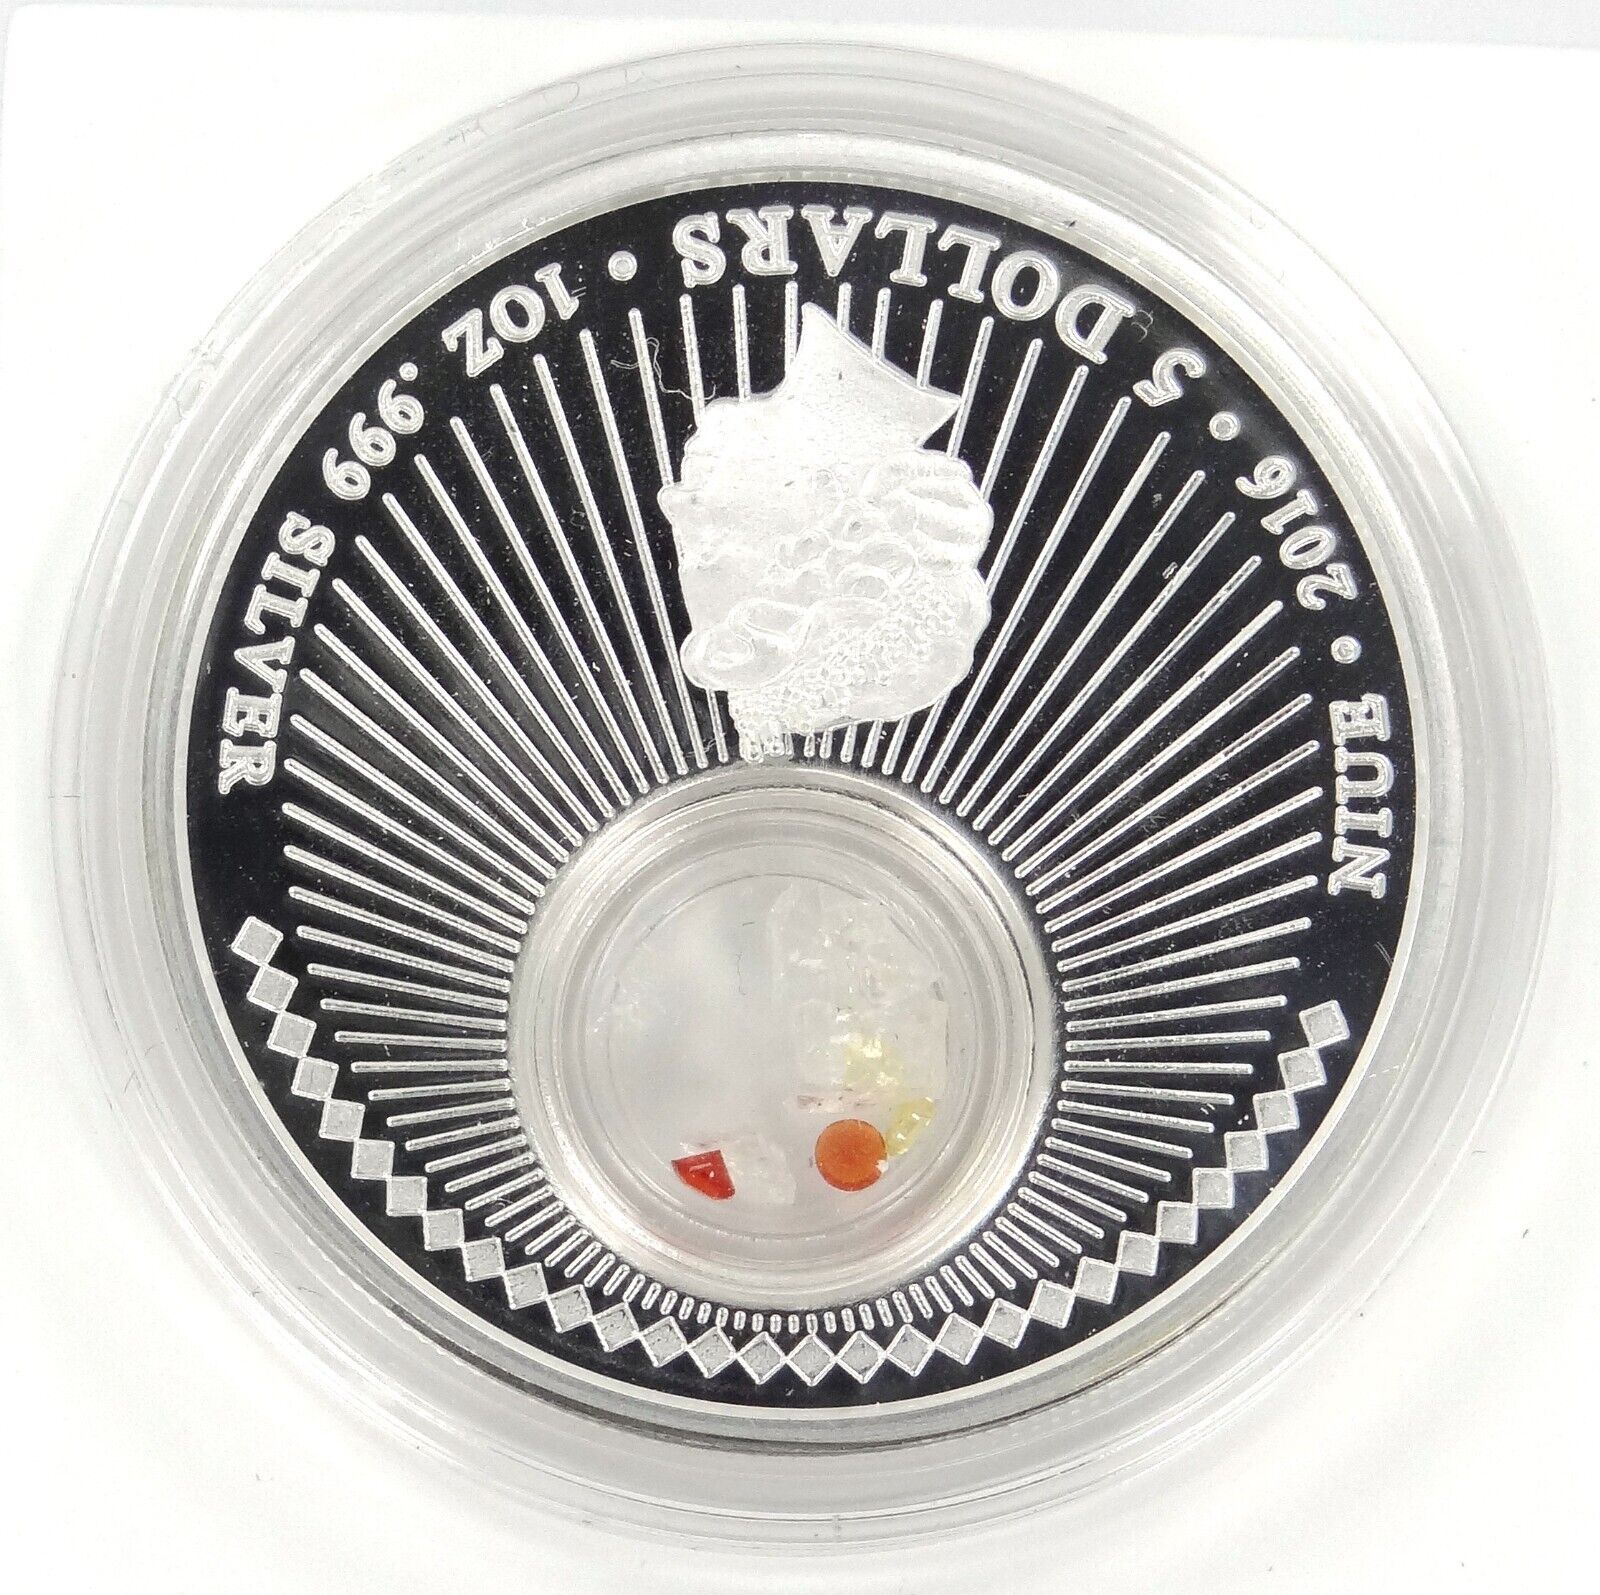 1 Oz Silver Coin 2016 Niue $5 Solar System with transparent capsule meteor glass-classypw.com-1